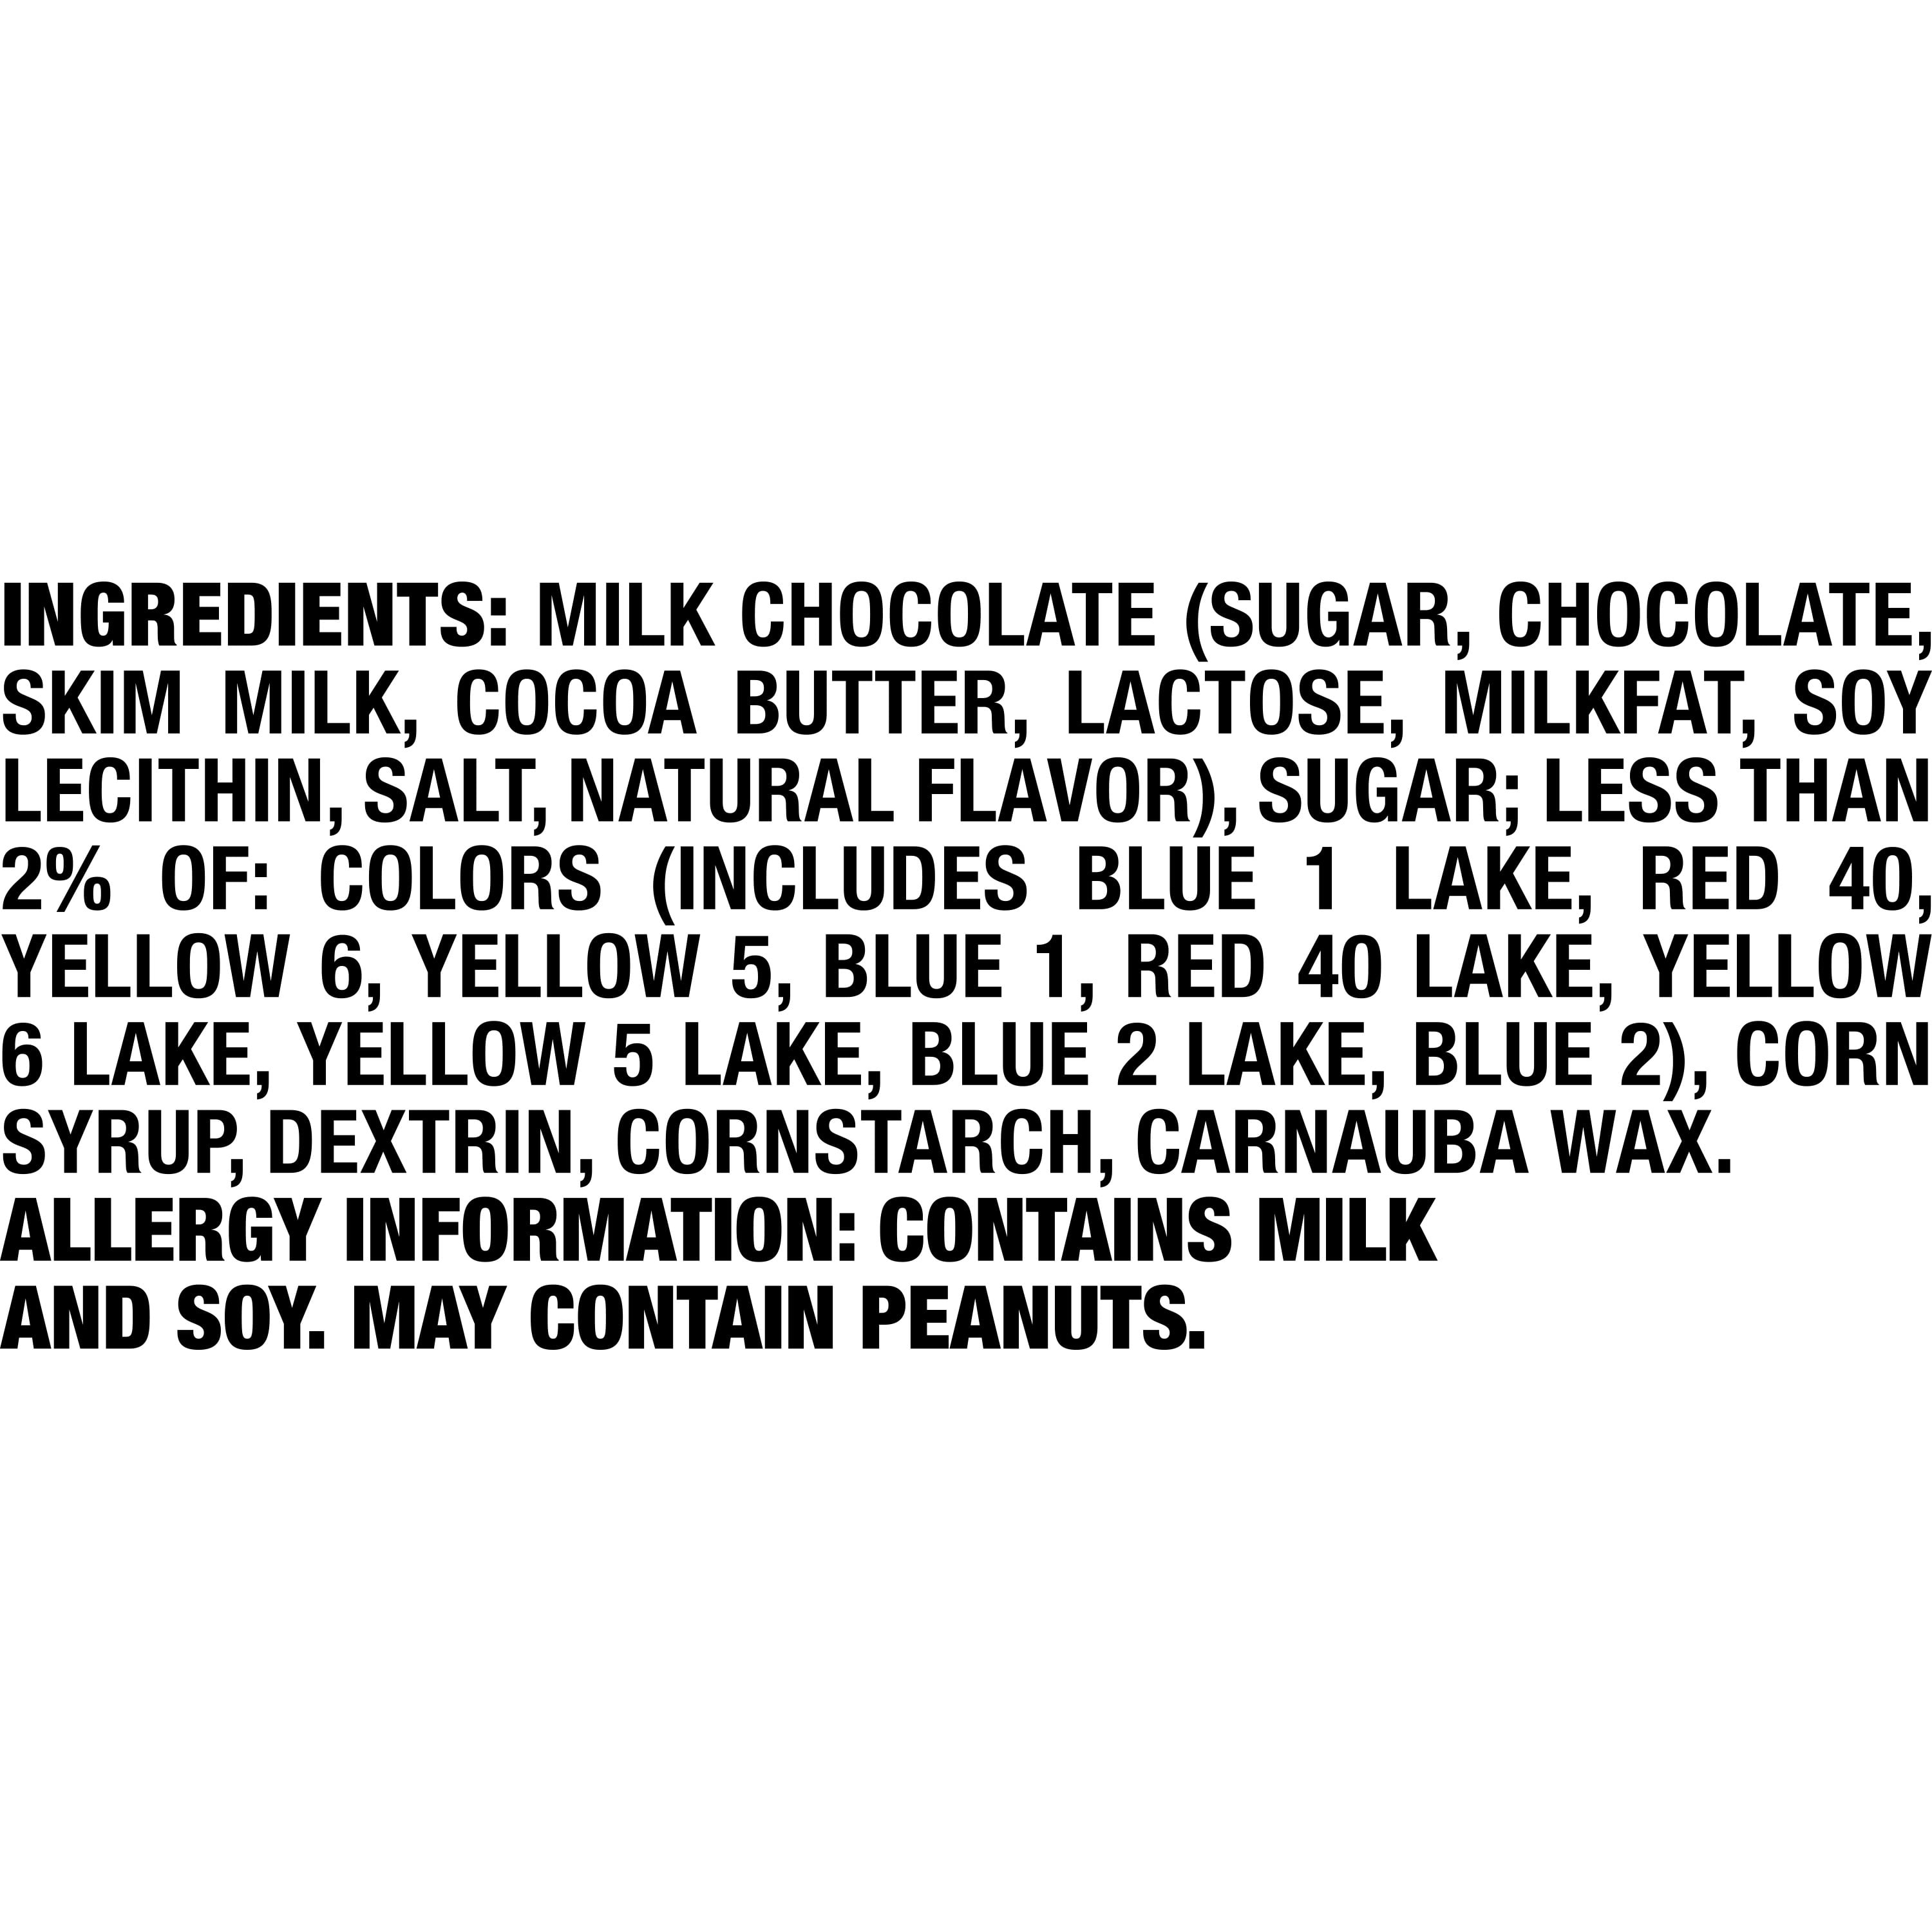 M&M's Chocolate Candies, Milk Chocolate, Minis, Family Size - 18.0 oz